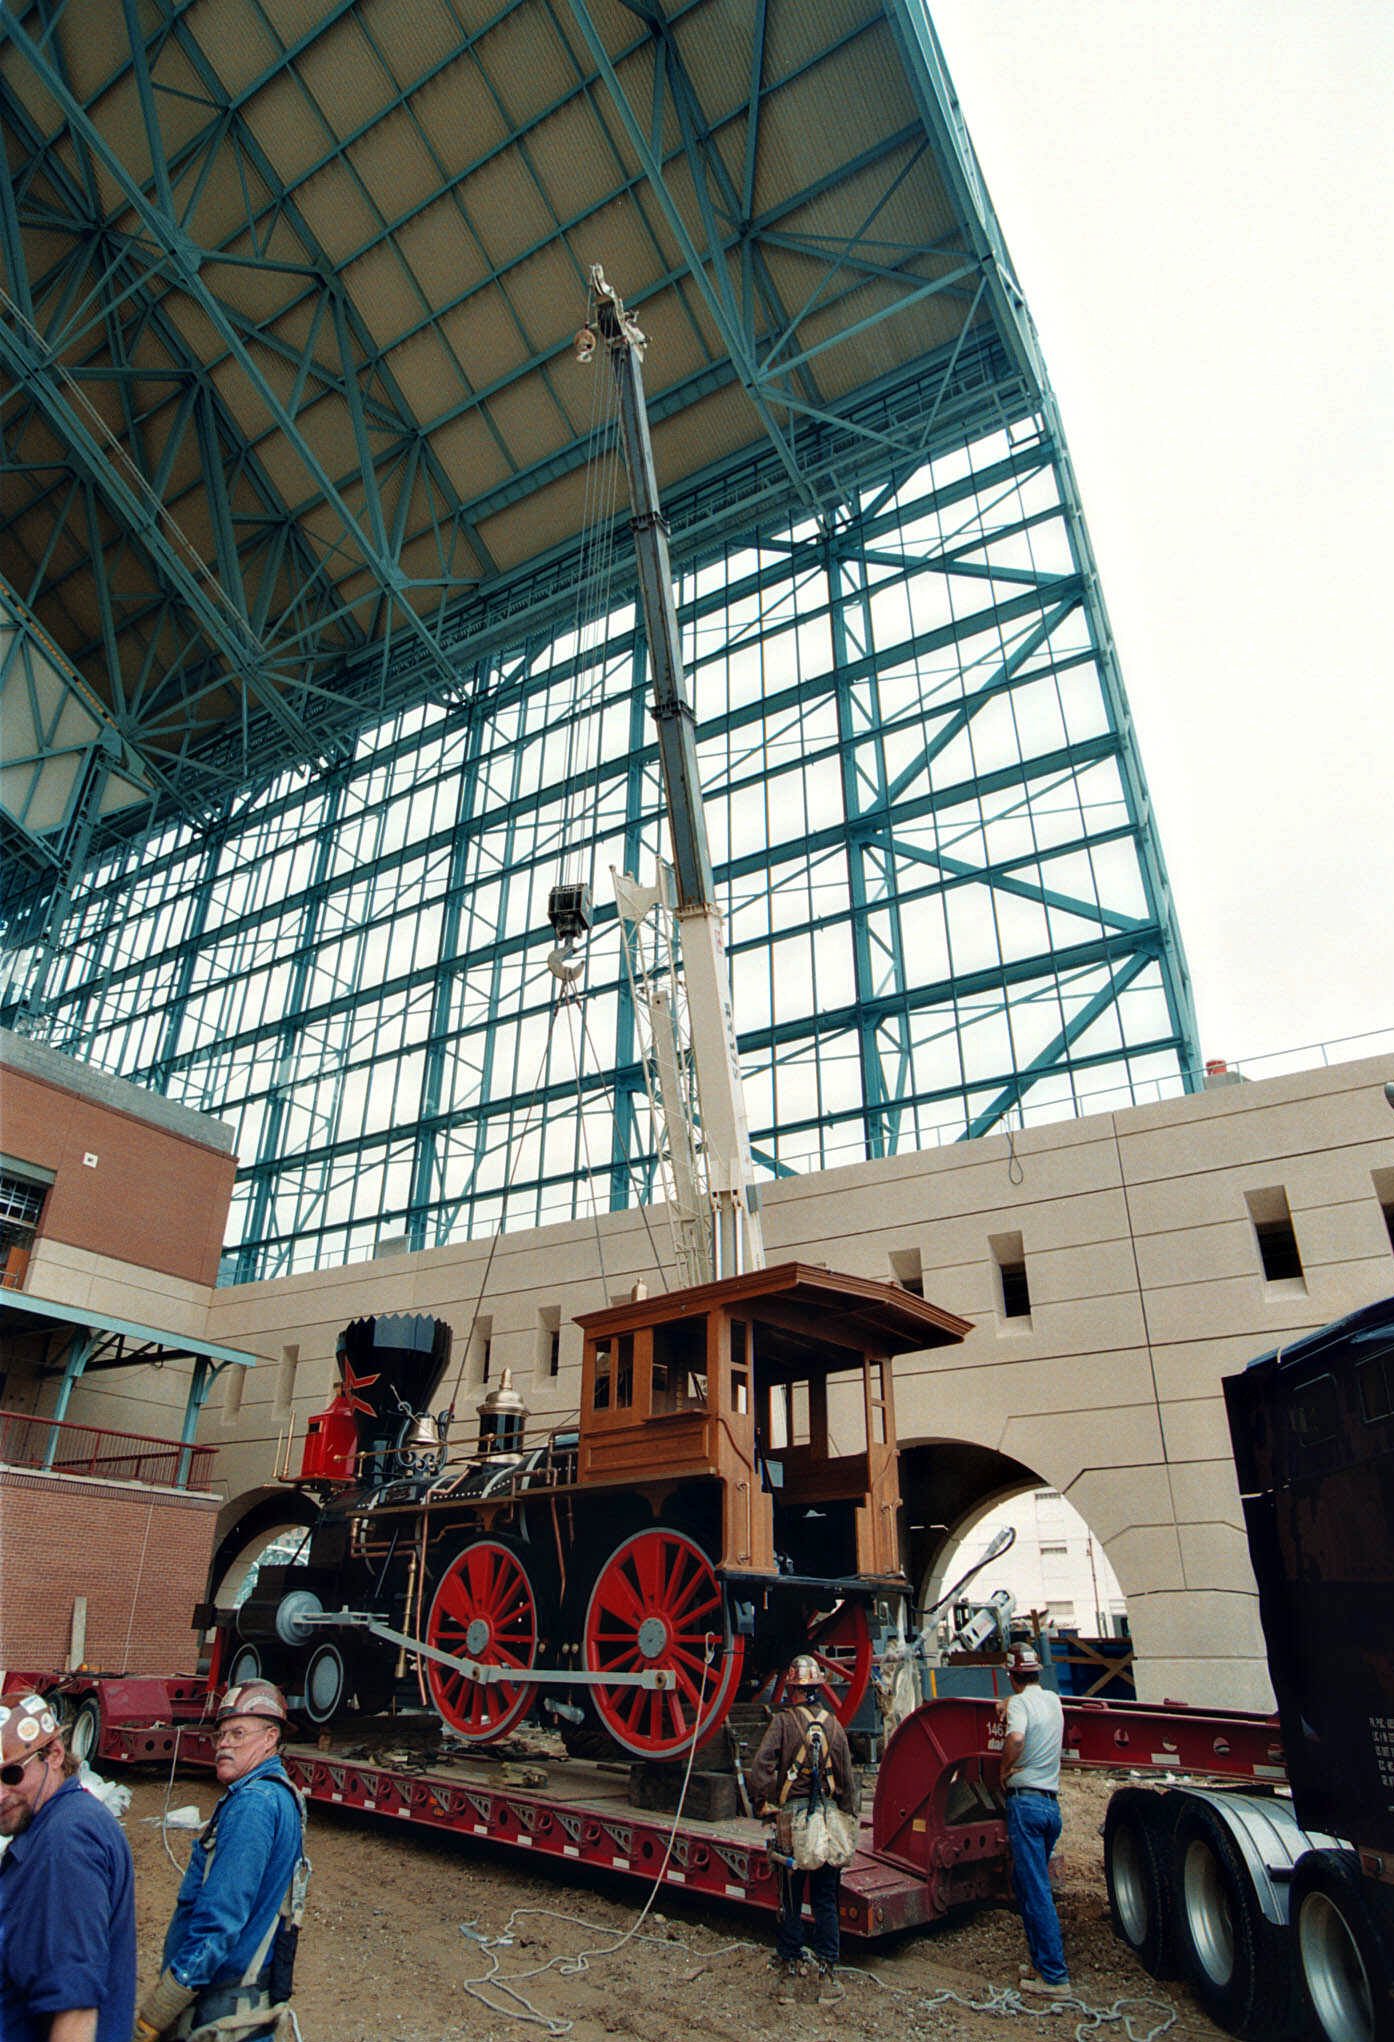 Minute Maid Park train: the Astros' replica 19th century